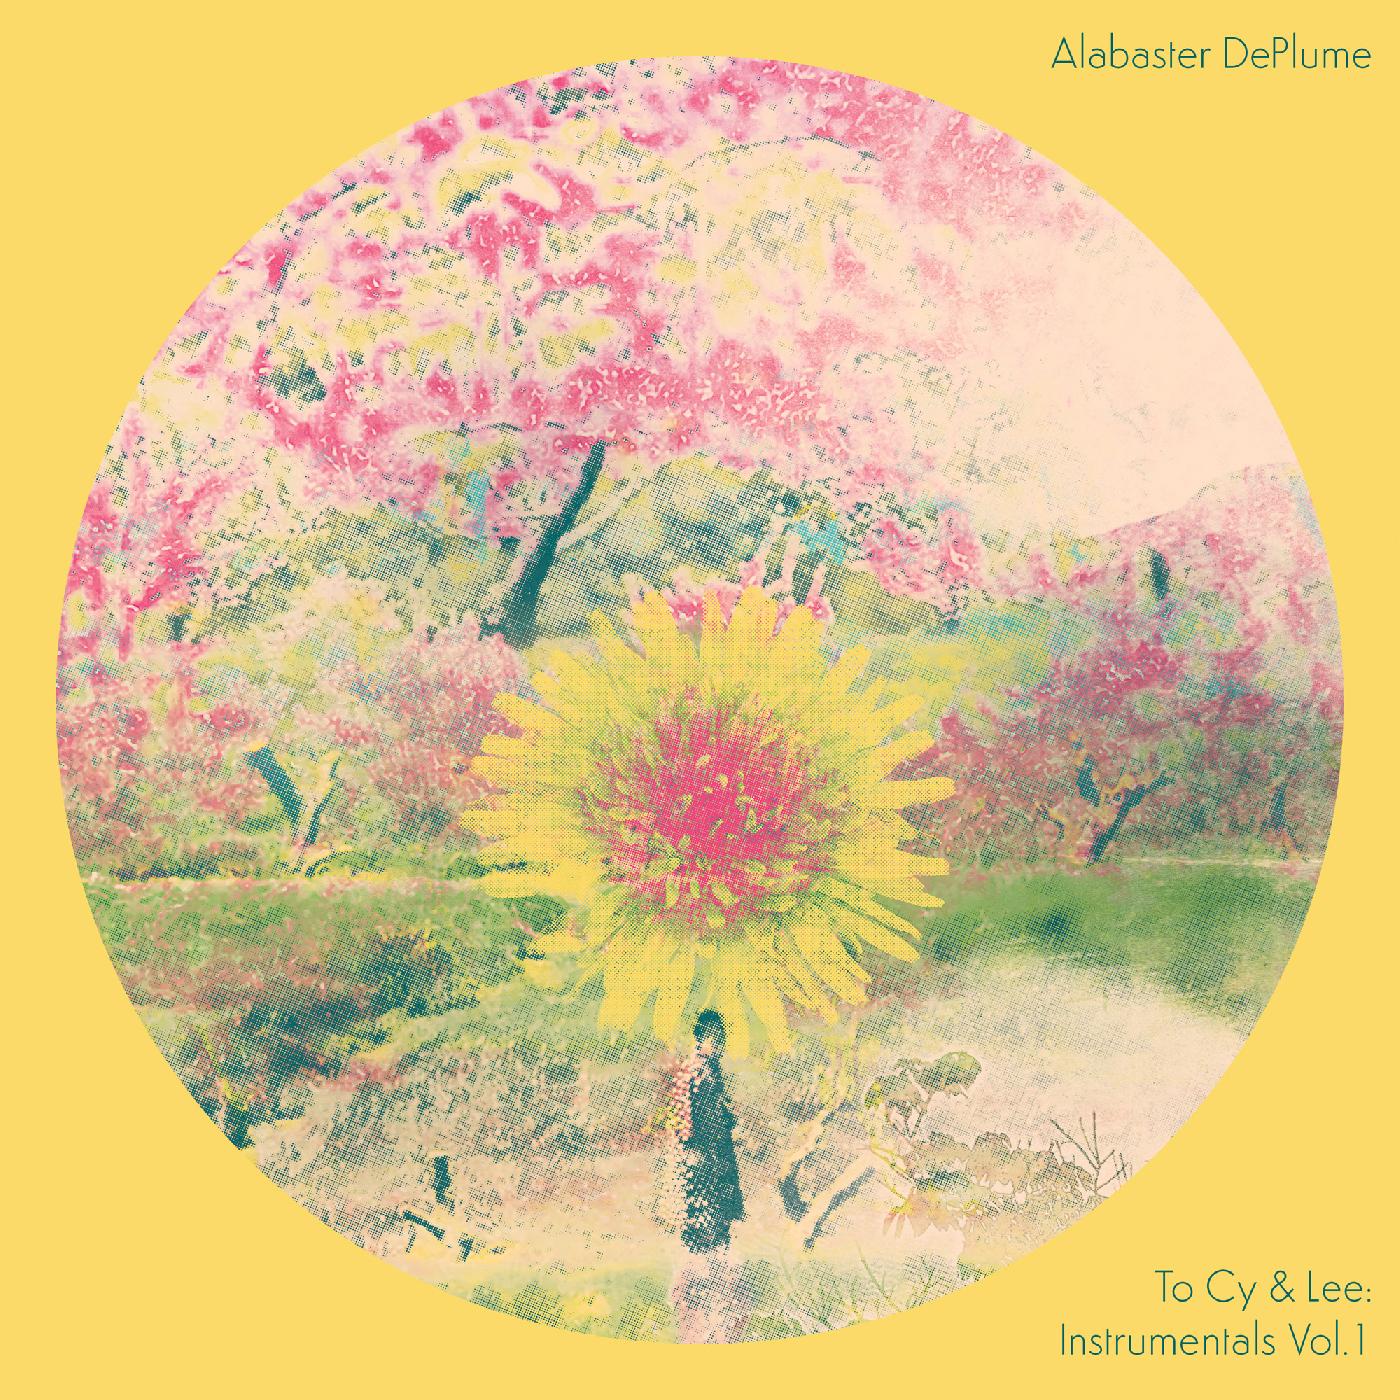 Alabaster Deplume - To Cy & Lee: Instrumentals Vol. 1 (Vinyl)